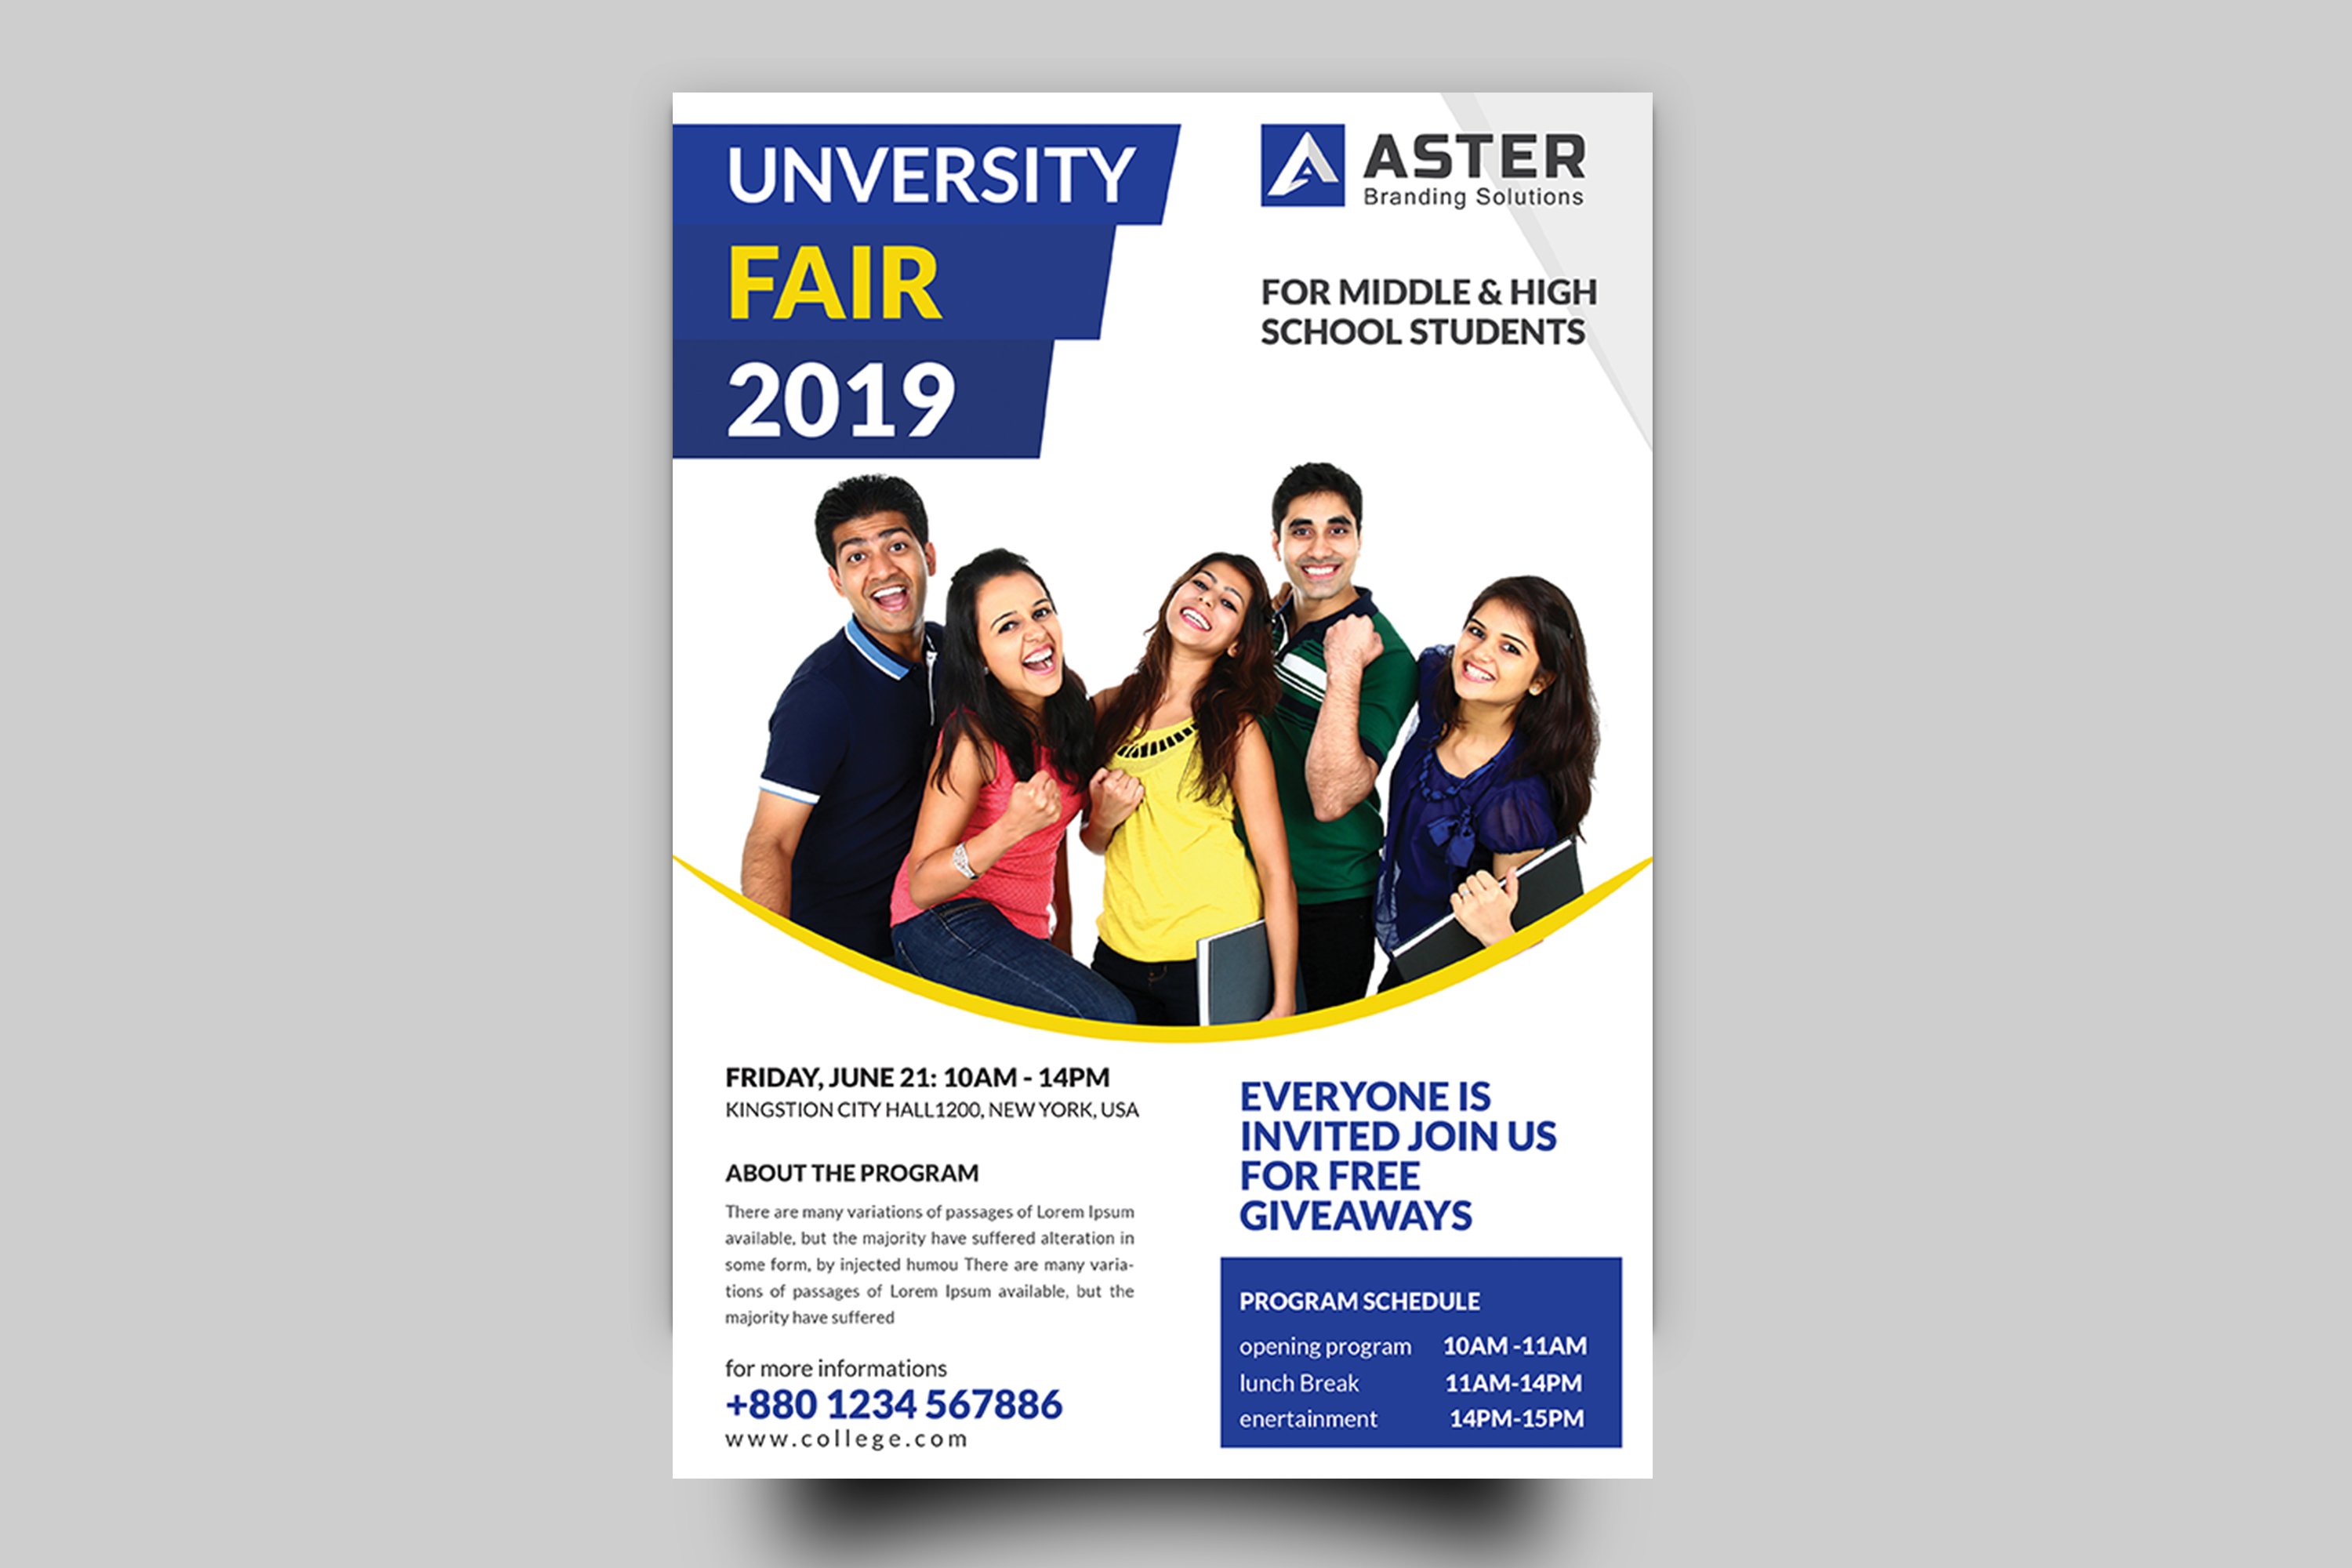 University Fair flyer cover image.